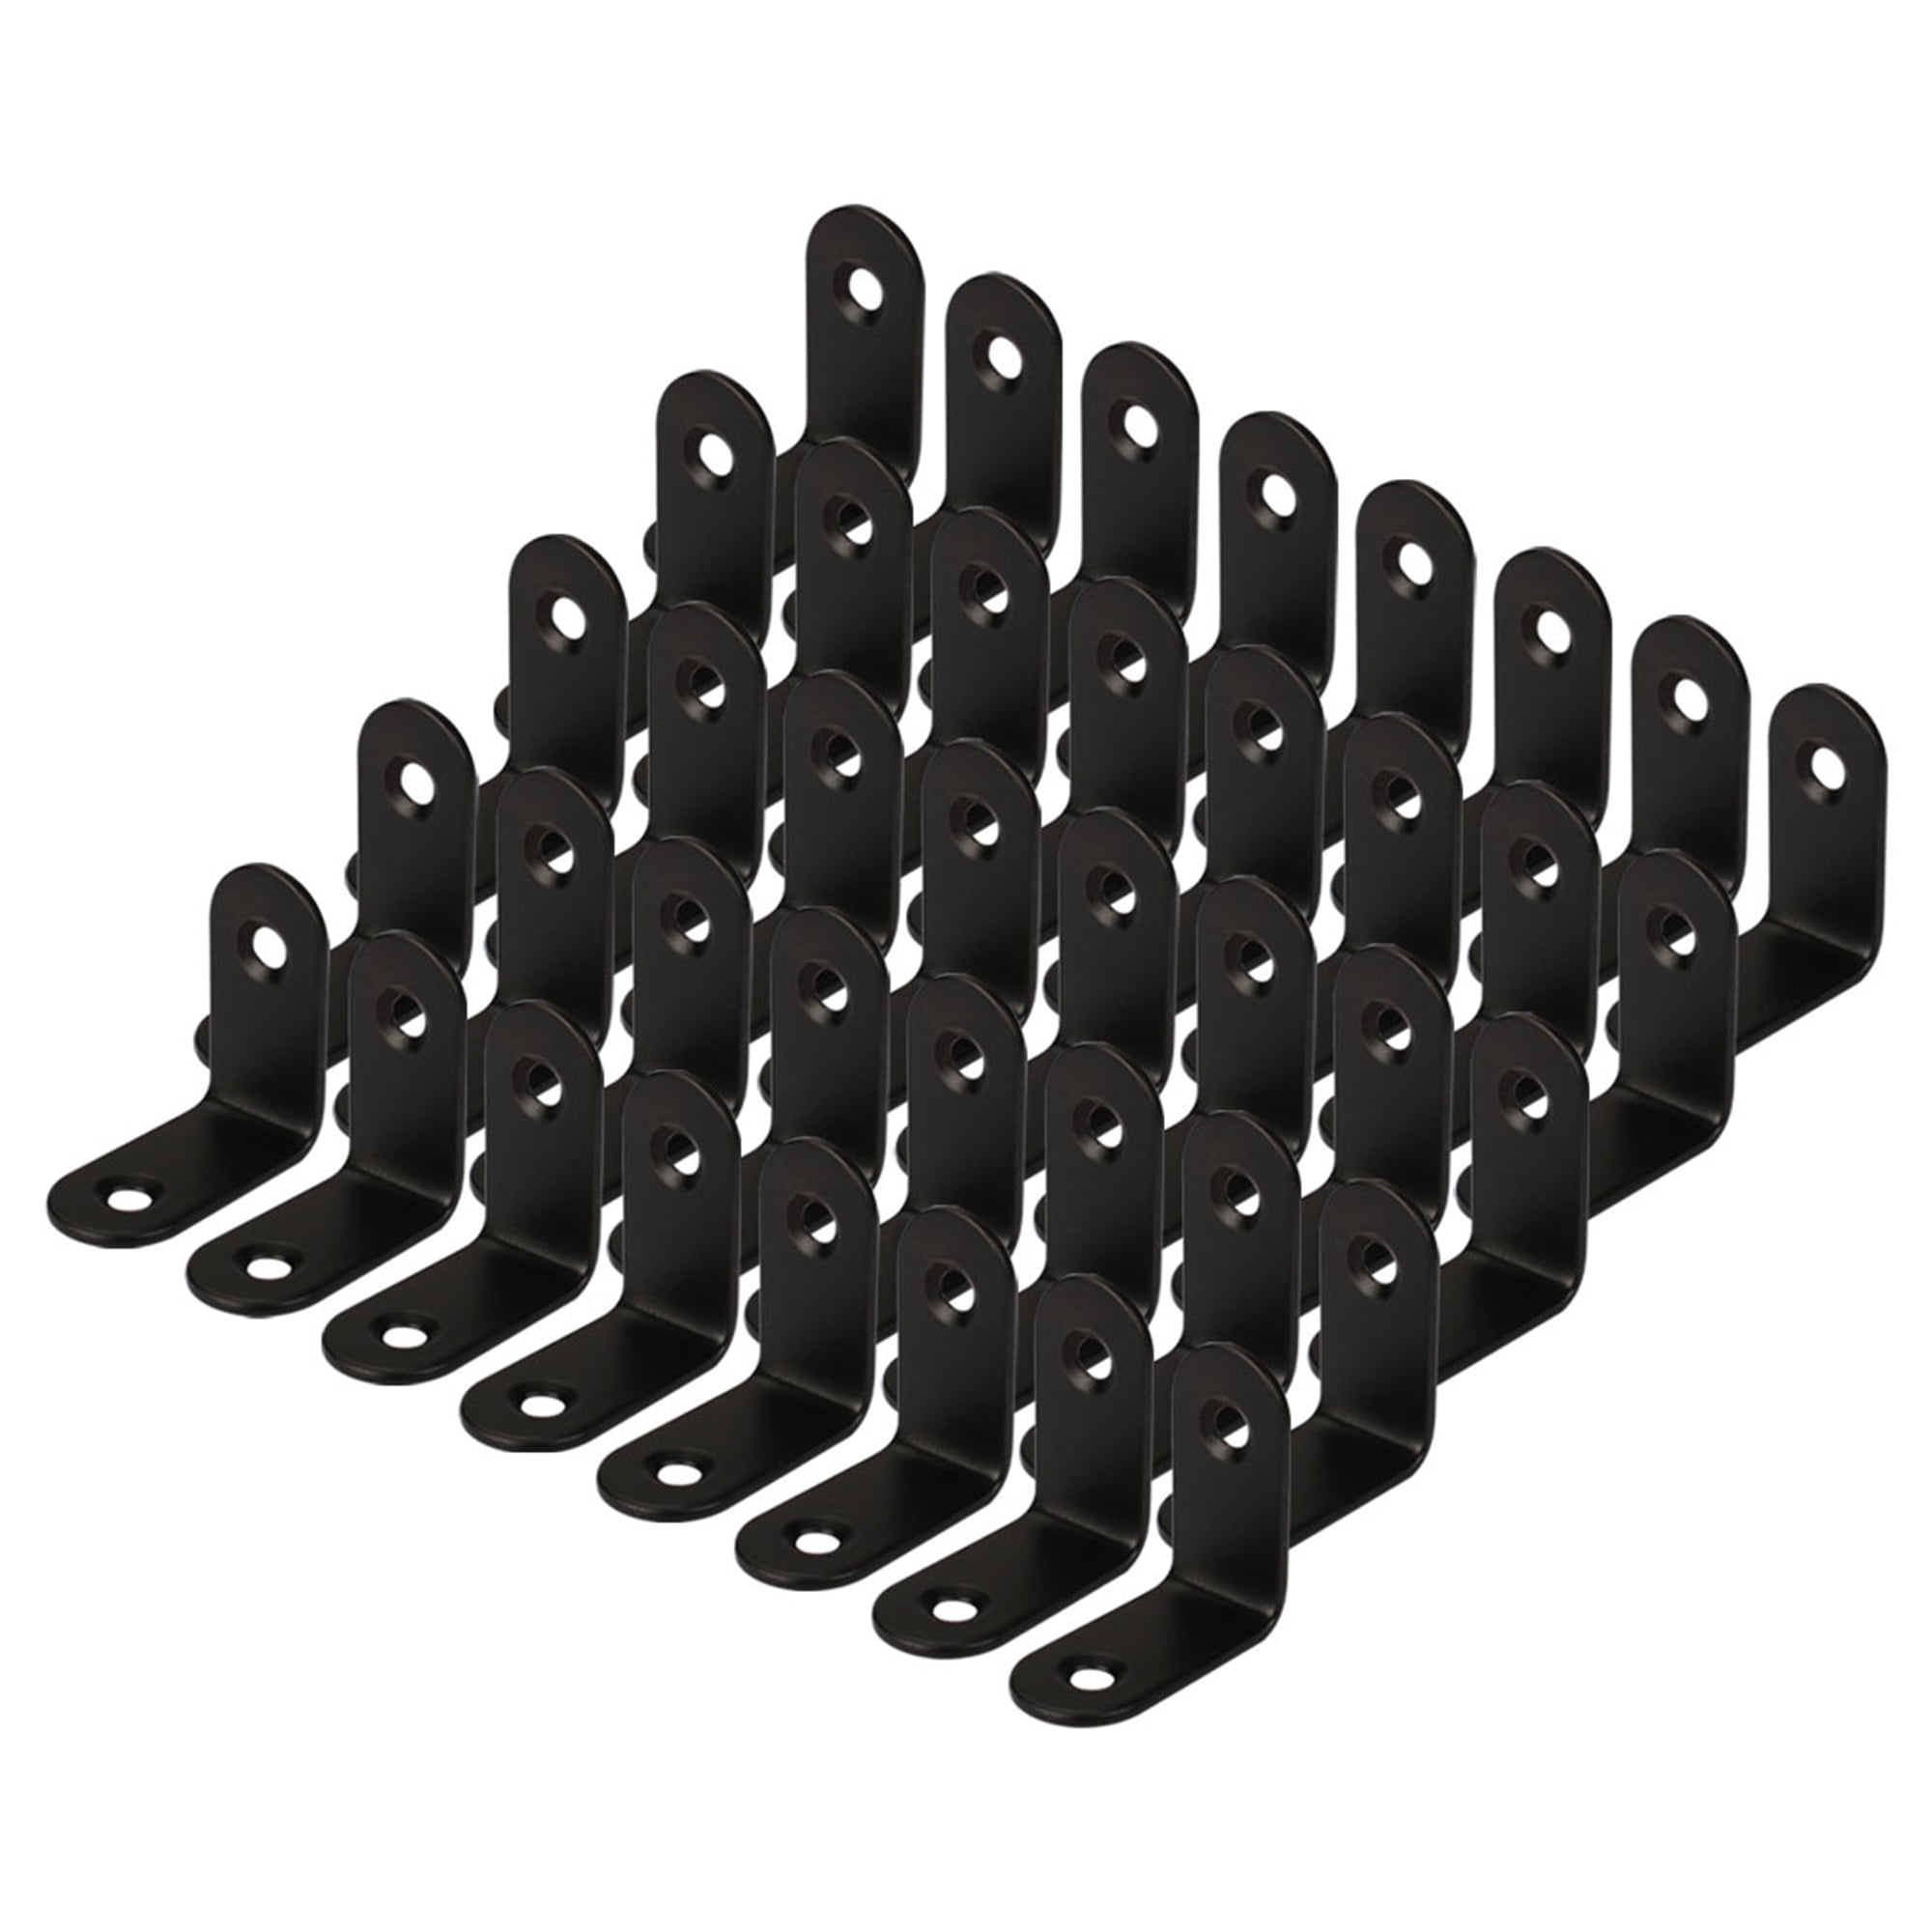 30 X 30mm Angle Bracket Stainless Steel Black L Shaped Angle Brackets